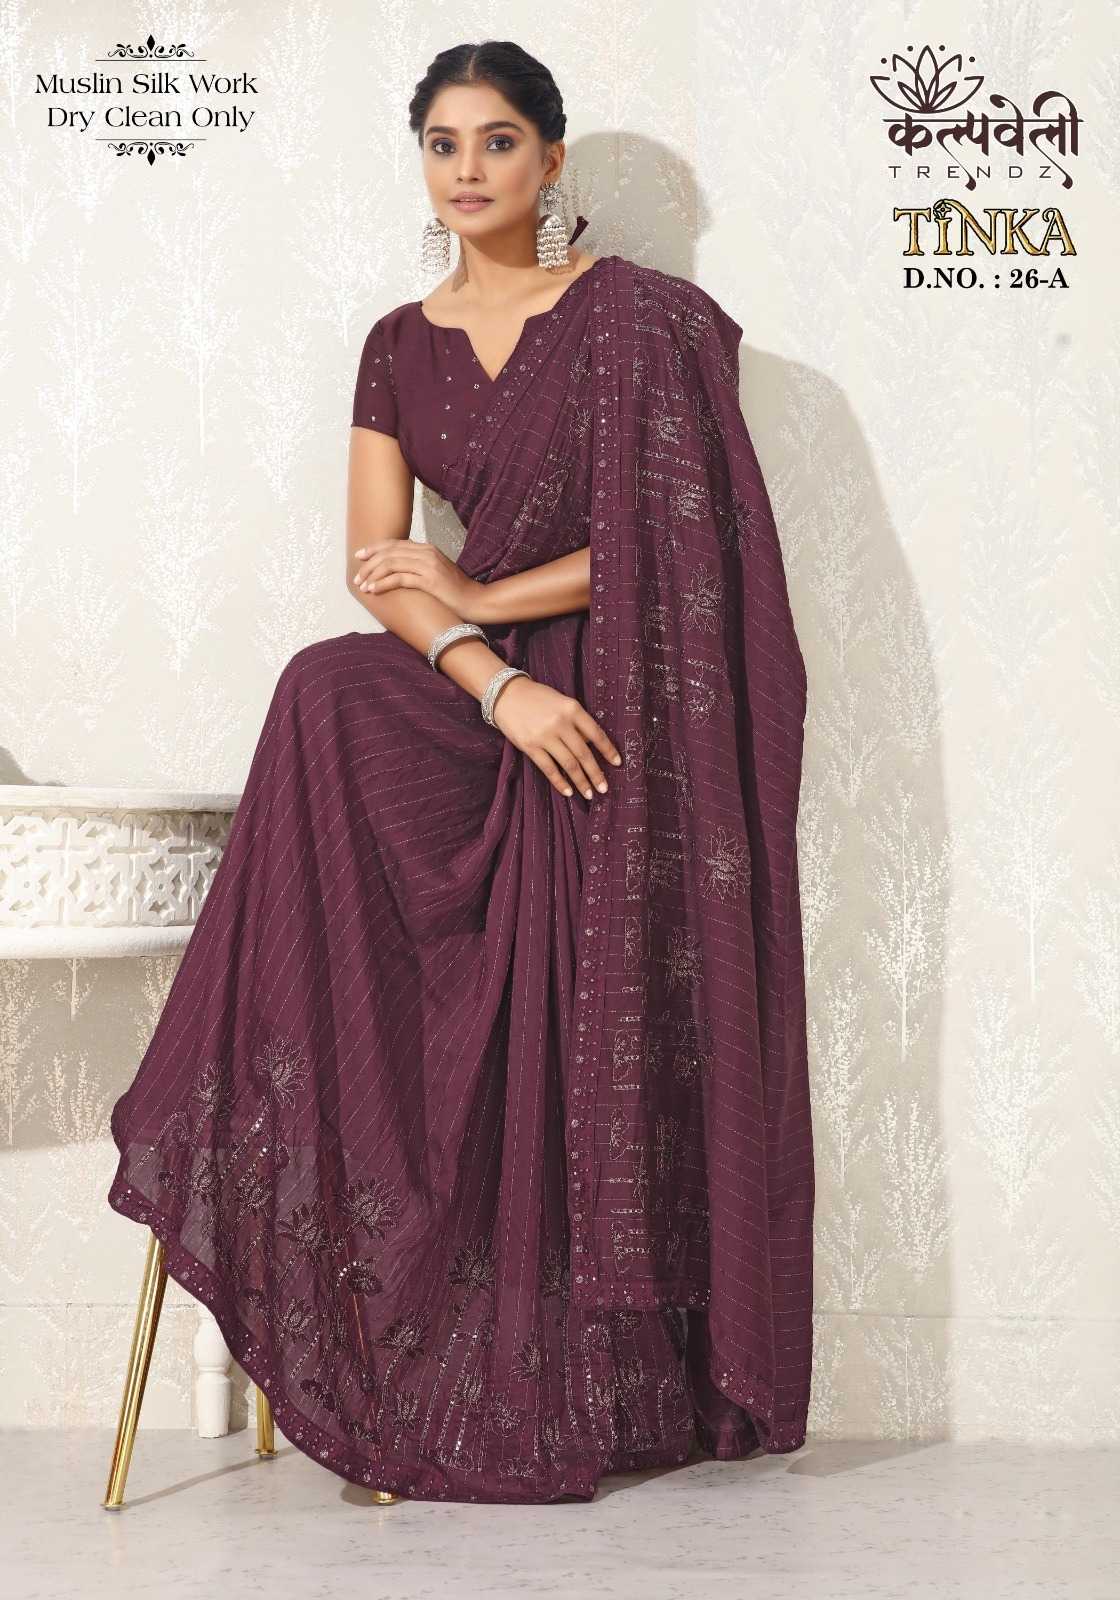 kalpavelly trendz tinka 26 occasion wear beautiful saree with fancy blouse